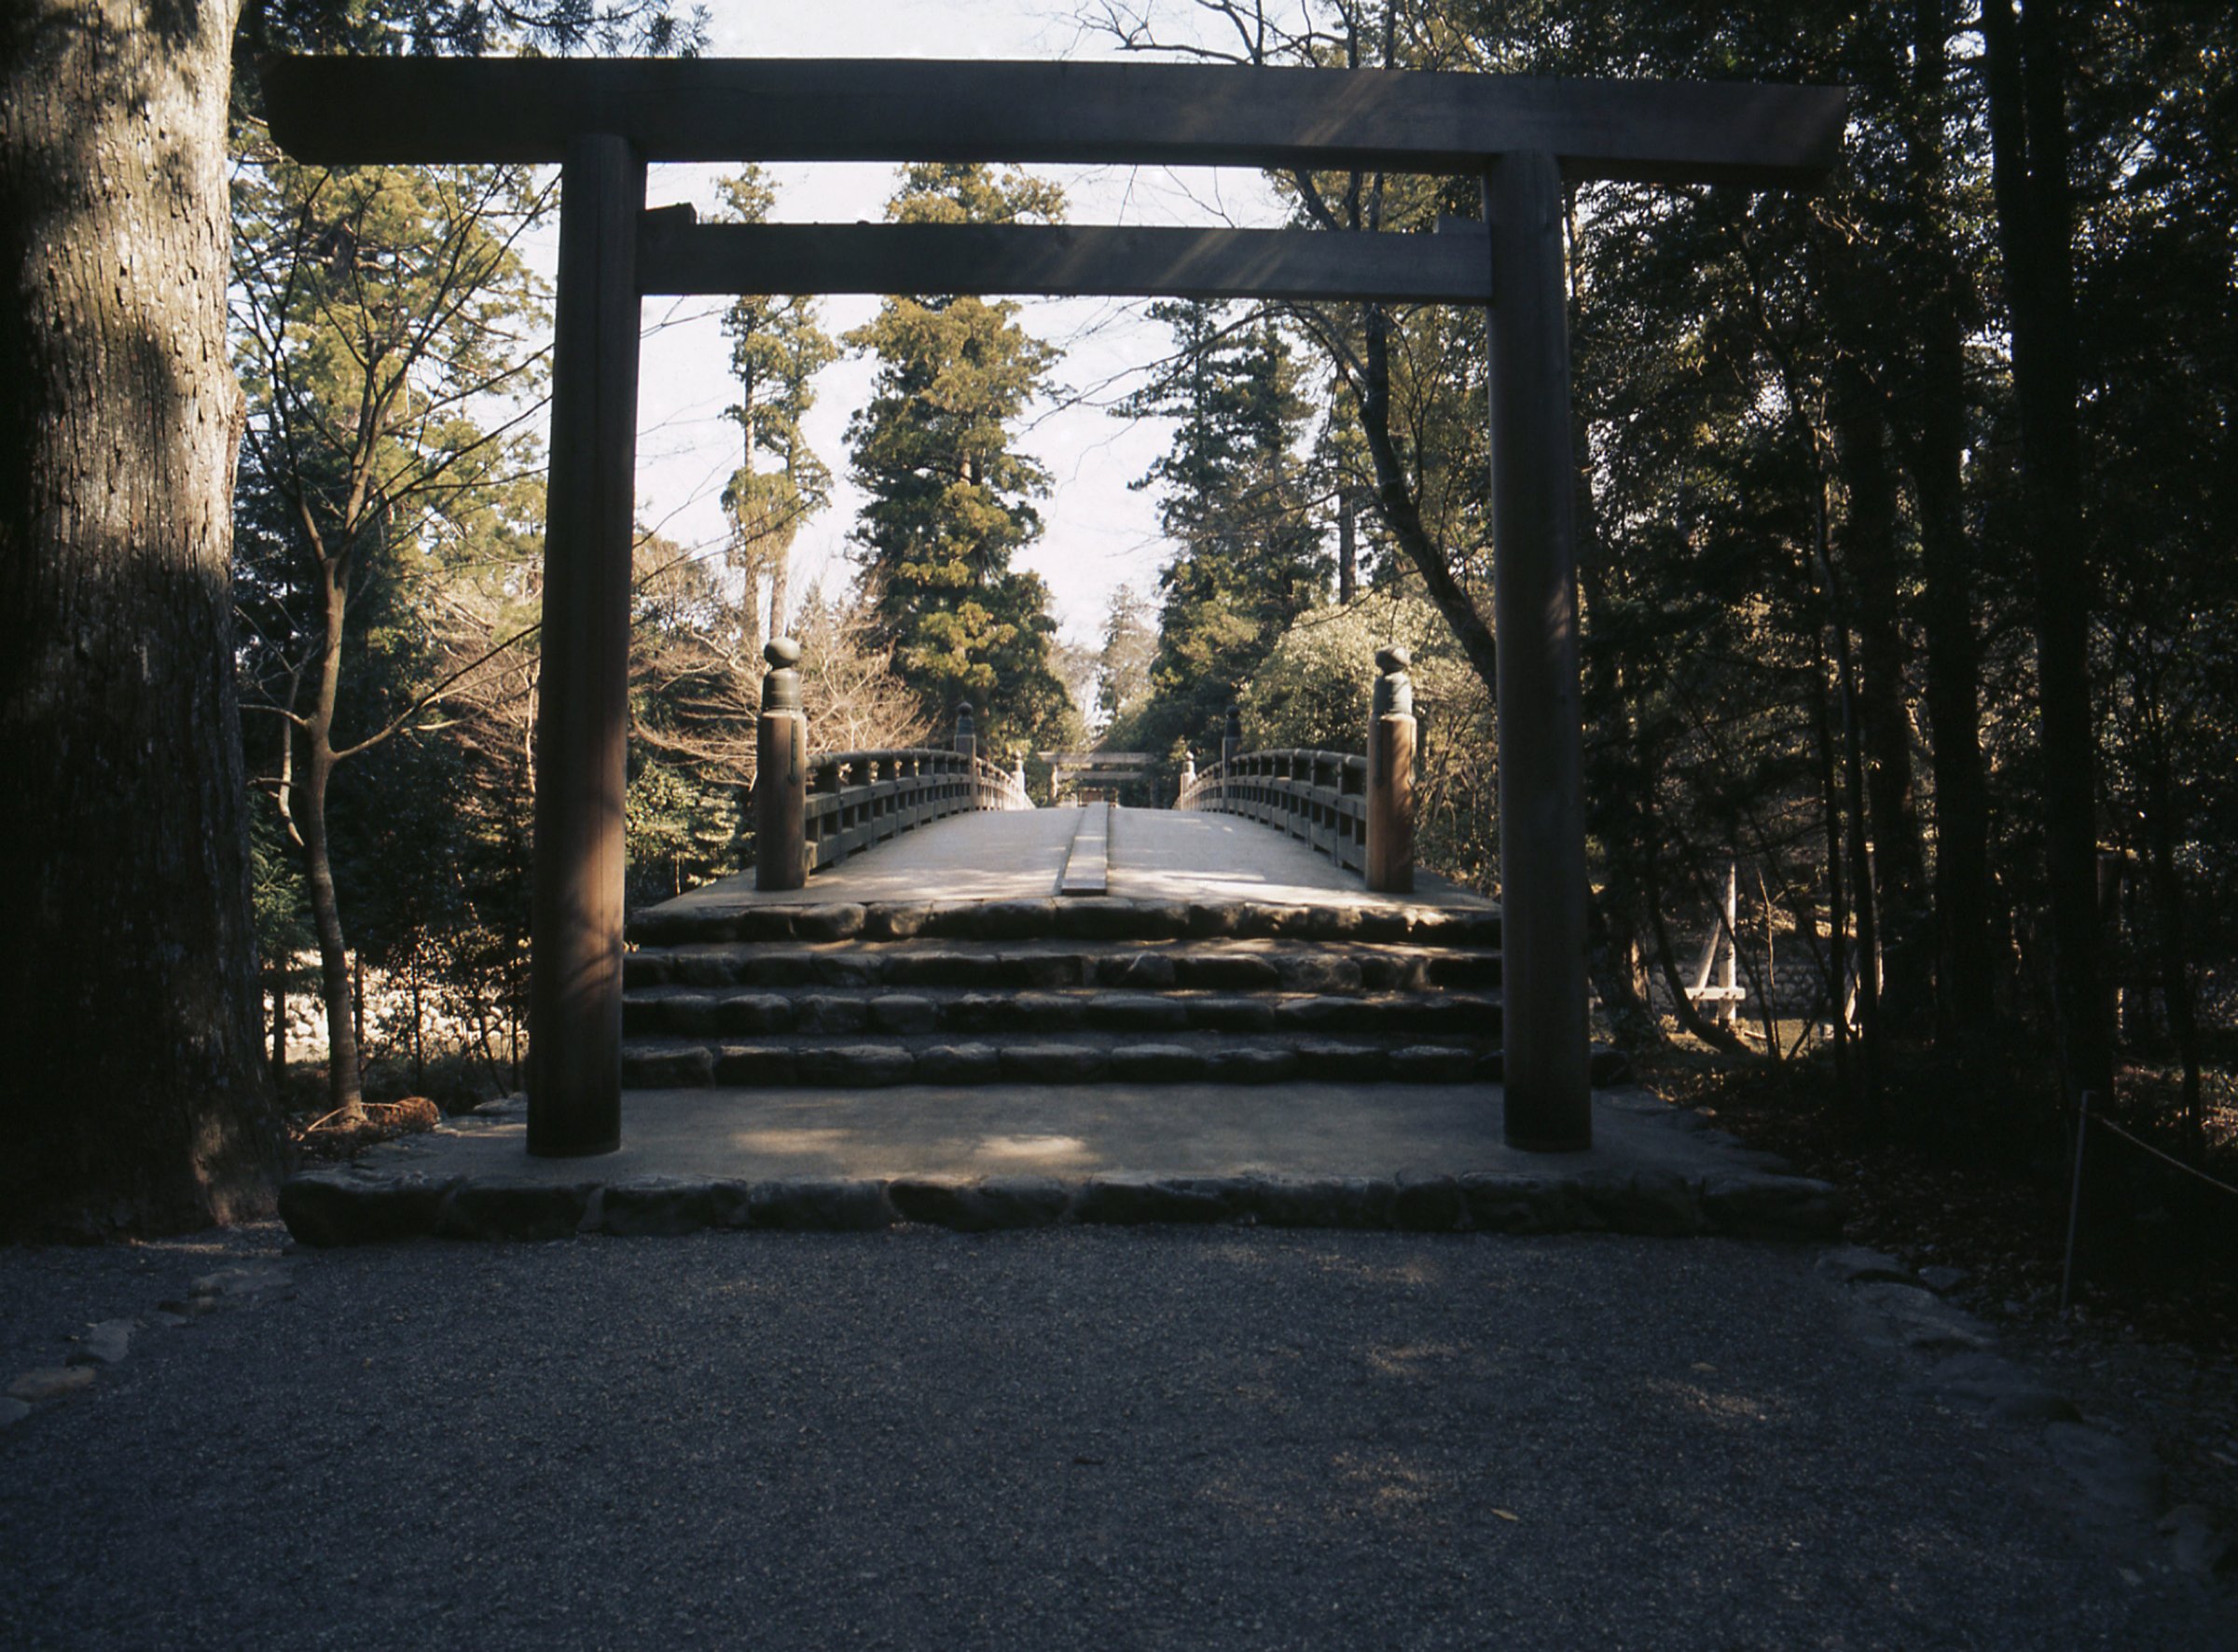 Ceremonial gateway, or Torii, Ise